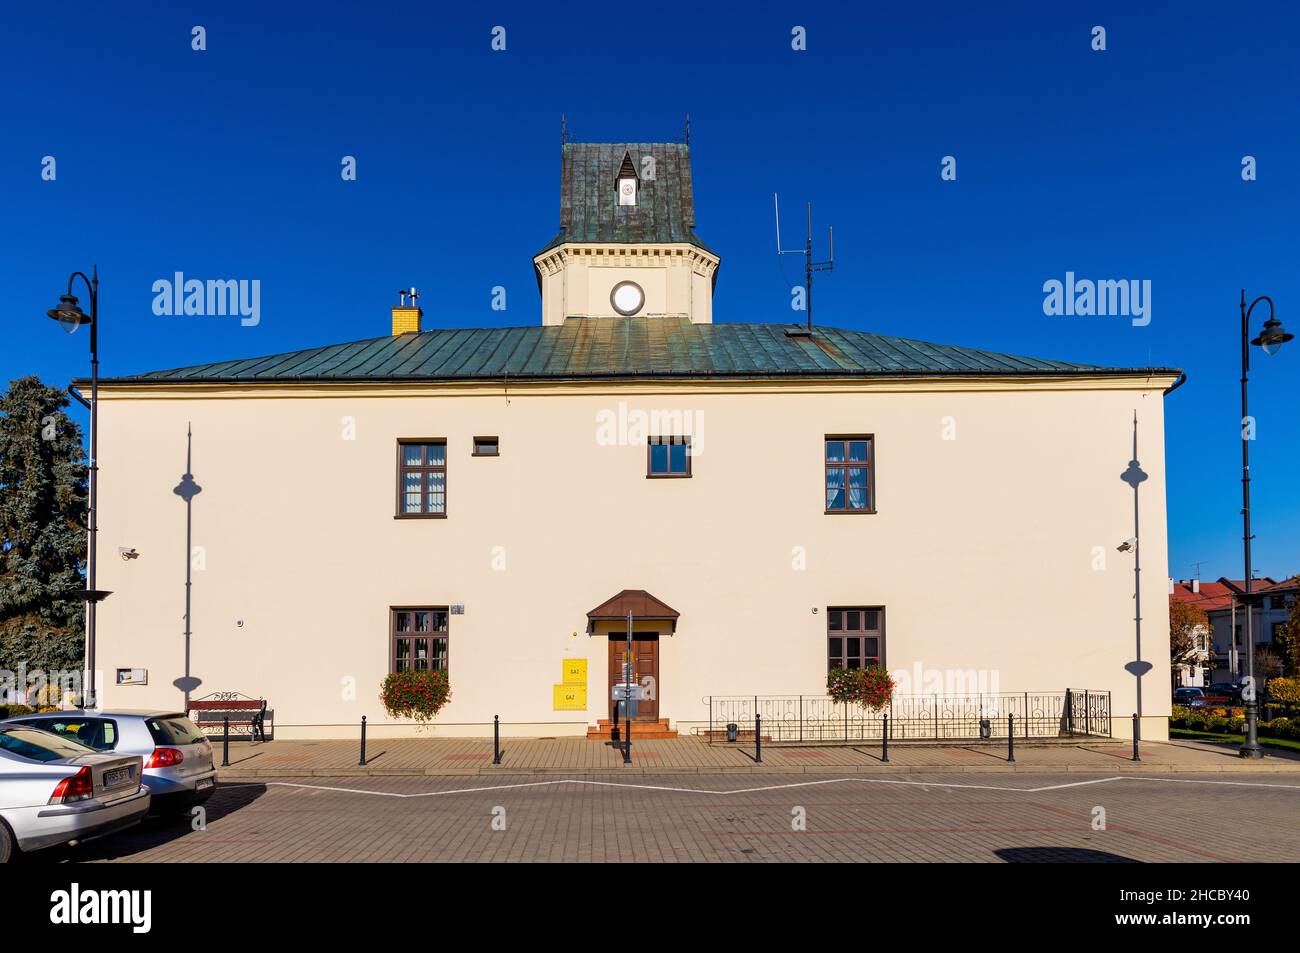 Sedziszow Malopolski, Poland - November 1, 2021: Historic Ratusz Town Hall building at Rynek Market Square in old town quarter of Sedziszow town Stock Photo